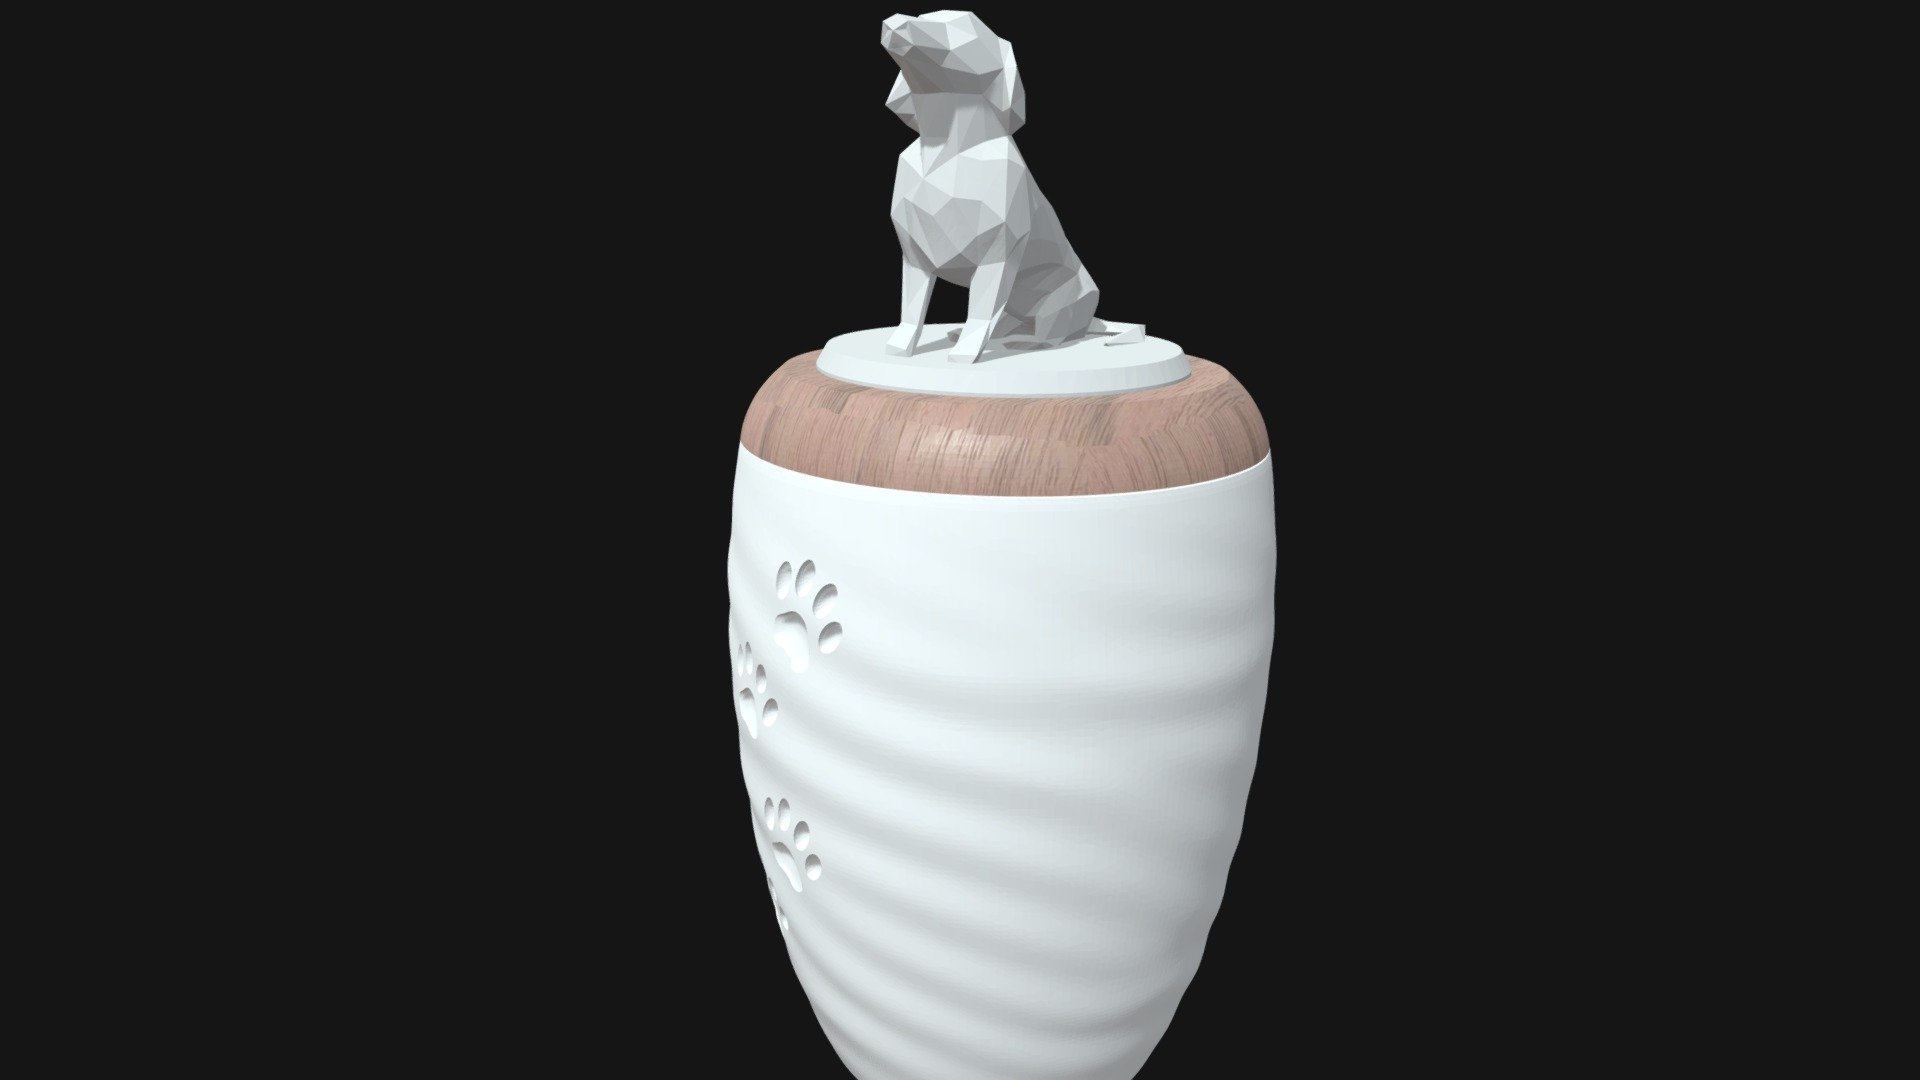 Pet urn designed by 3D Zentrum
Available soon as customized an 3D printed urn on https://www.3dzentrum.de/ - Tierurne - Download Free 3D model by Nexilion 3d model